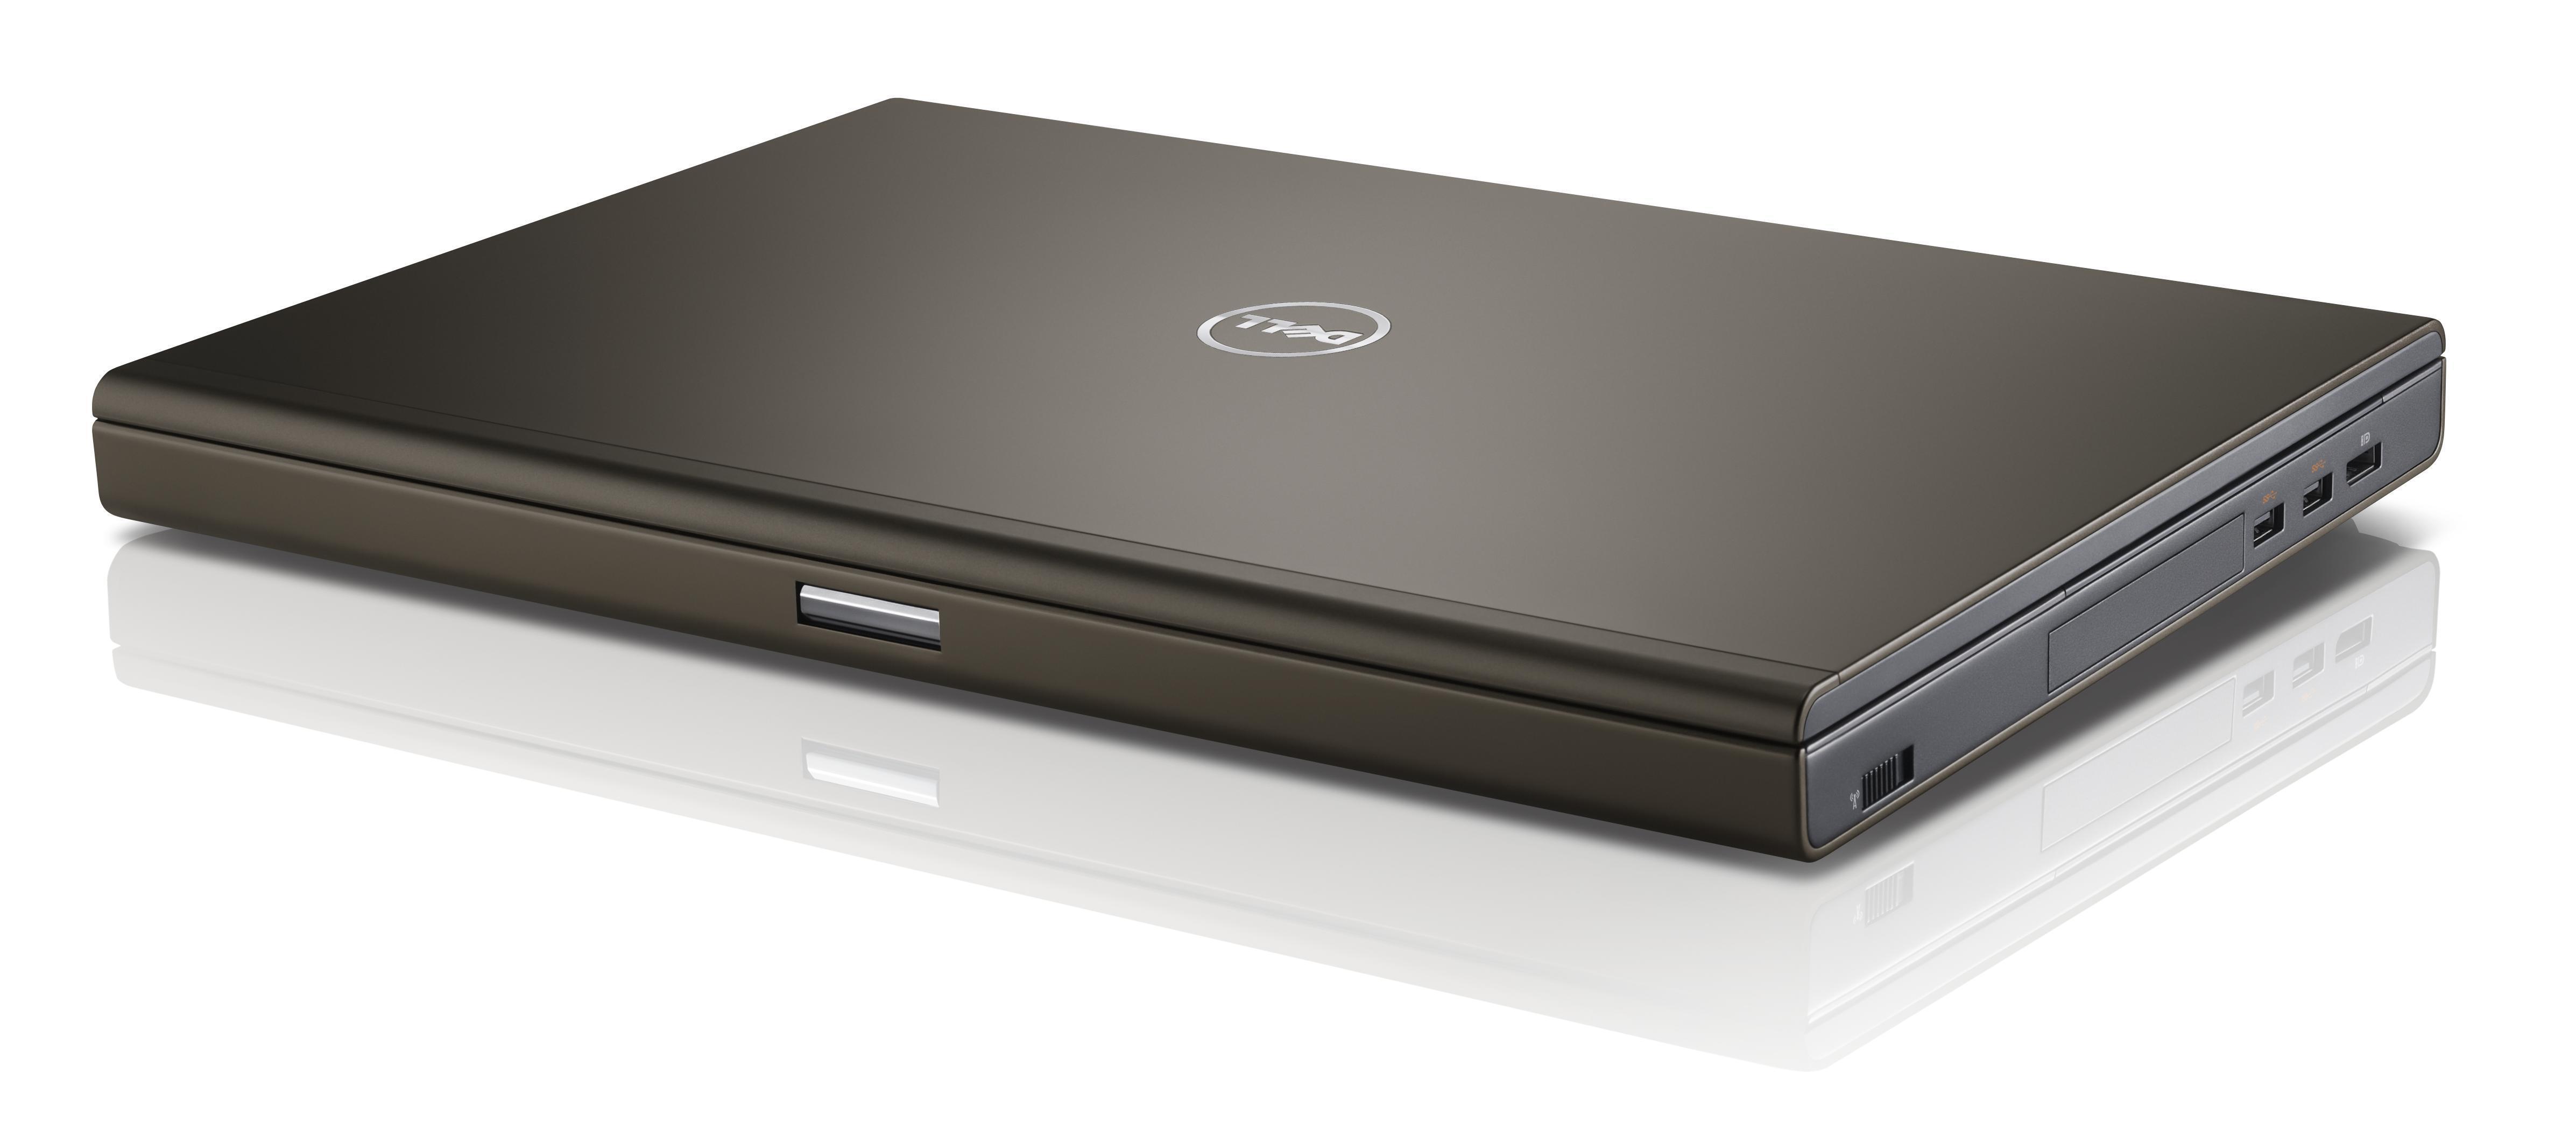 Laptop Dell Precision M4600 - Intel Core i5-2520M 2.5GHz, 8GB RAM, 320GB HDD, NVIDIA Quadro 2000M, 15.6 inch